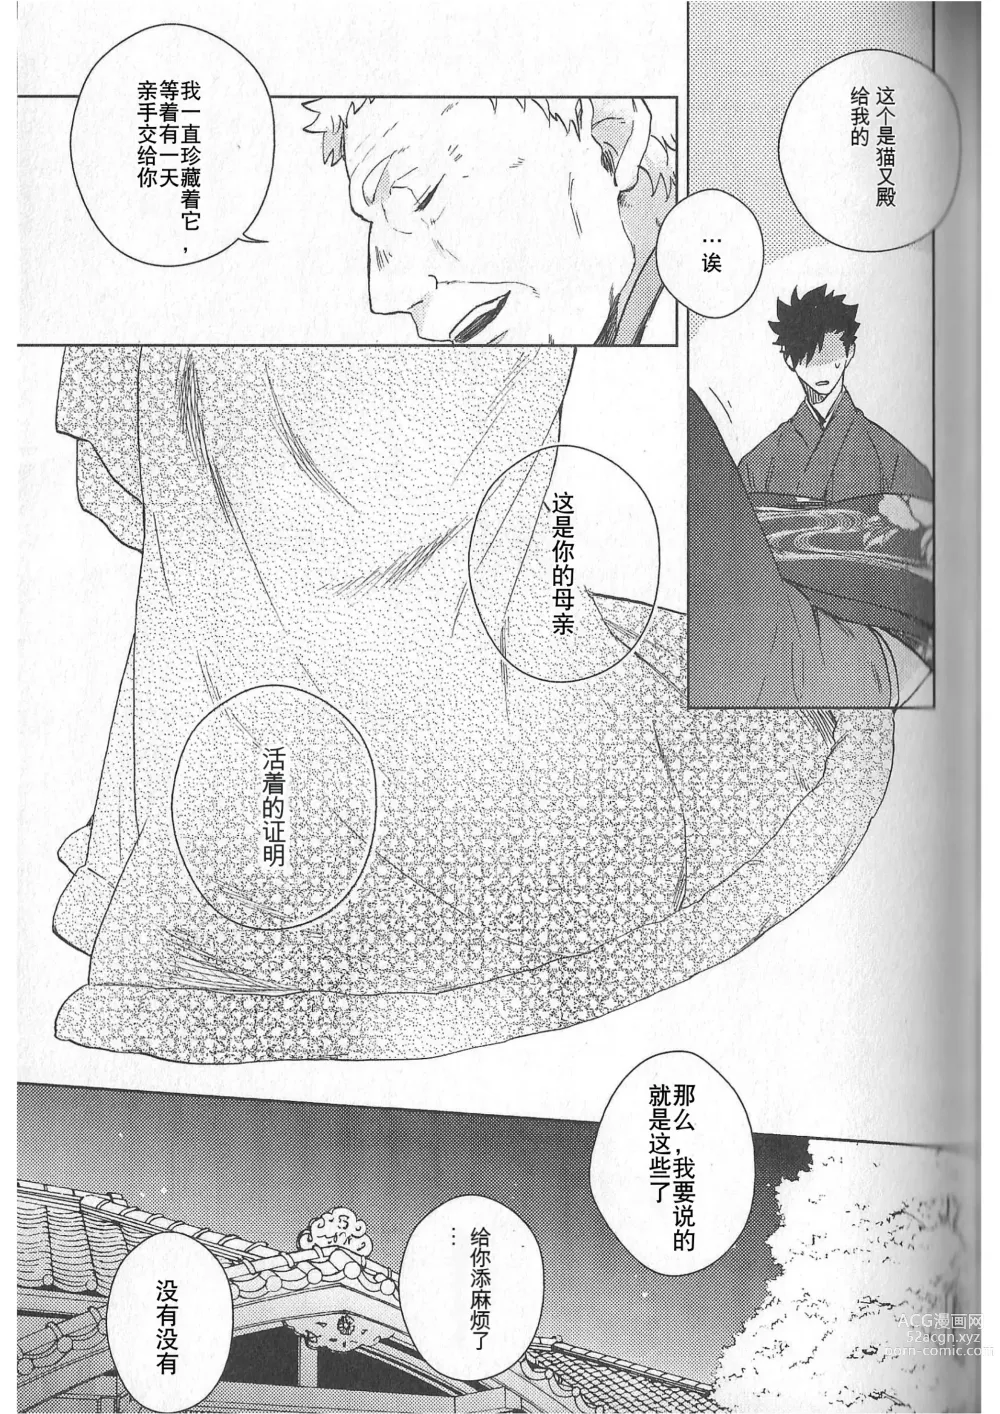 Page 32 of doujinshi 破晓之枭后篇